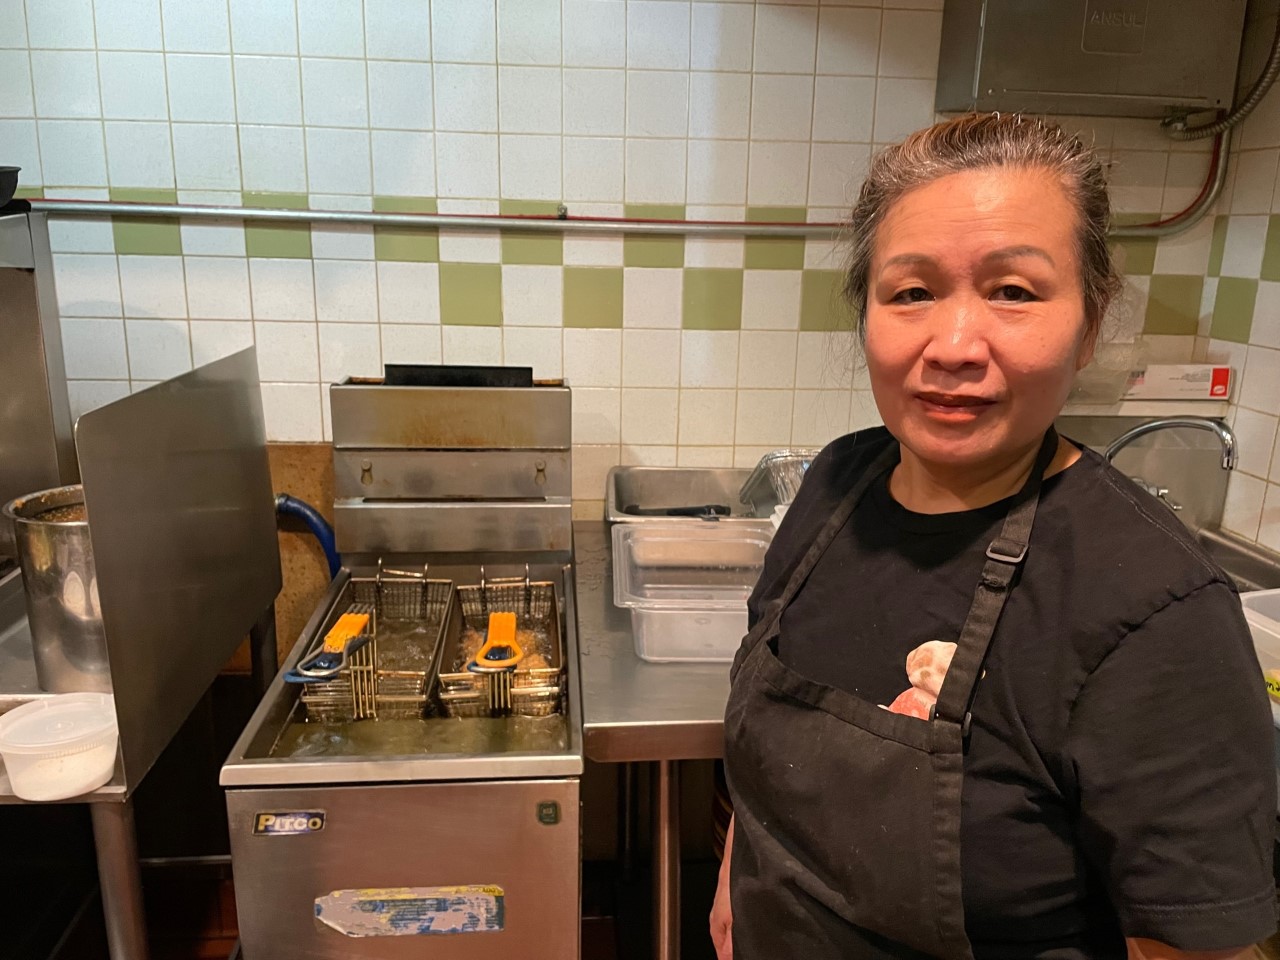 Chef Manola Hoang frying dumplings in the Ahan kitchen on February 8, 2023. (Maureen McCollum/WPR)